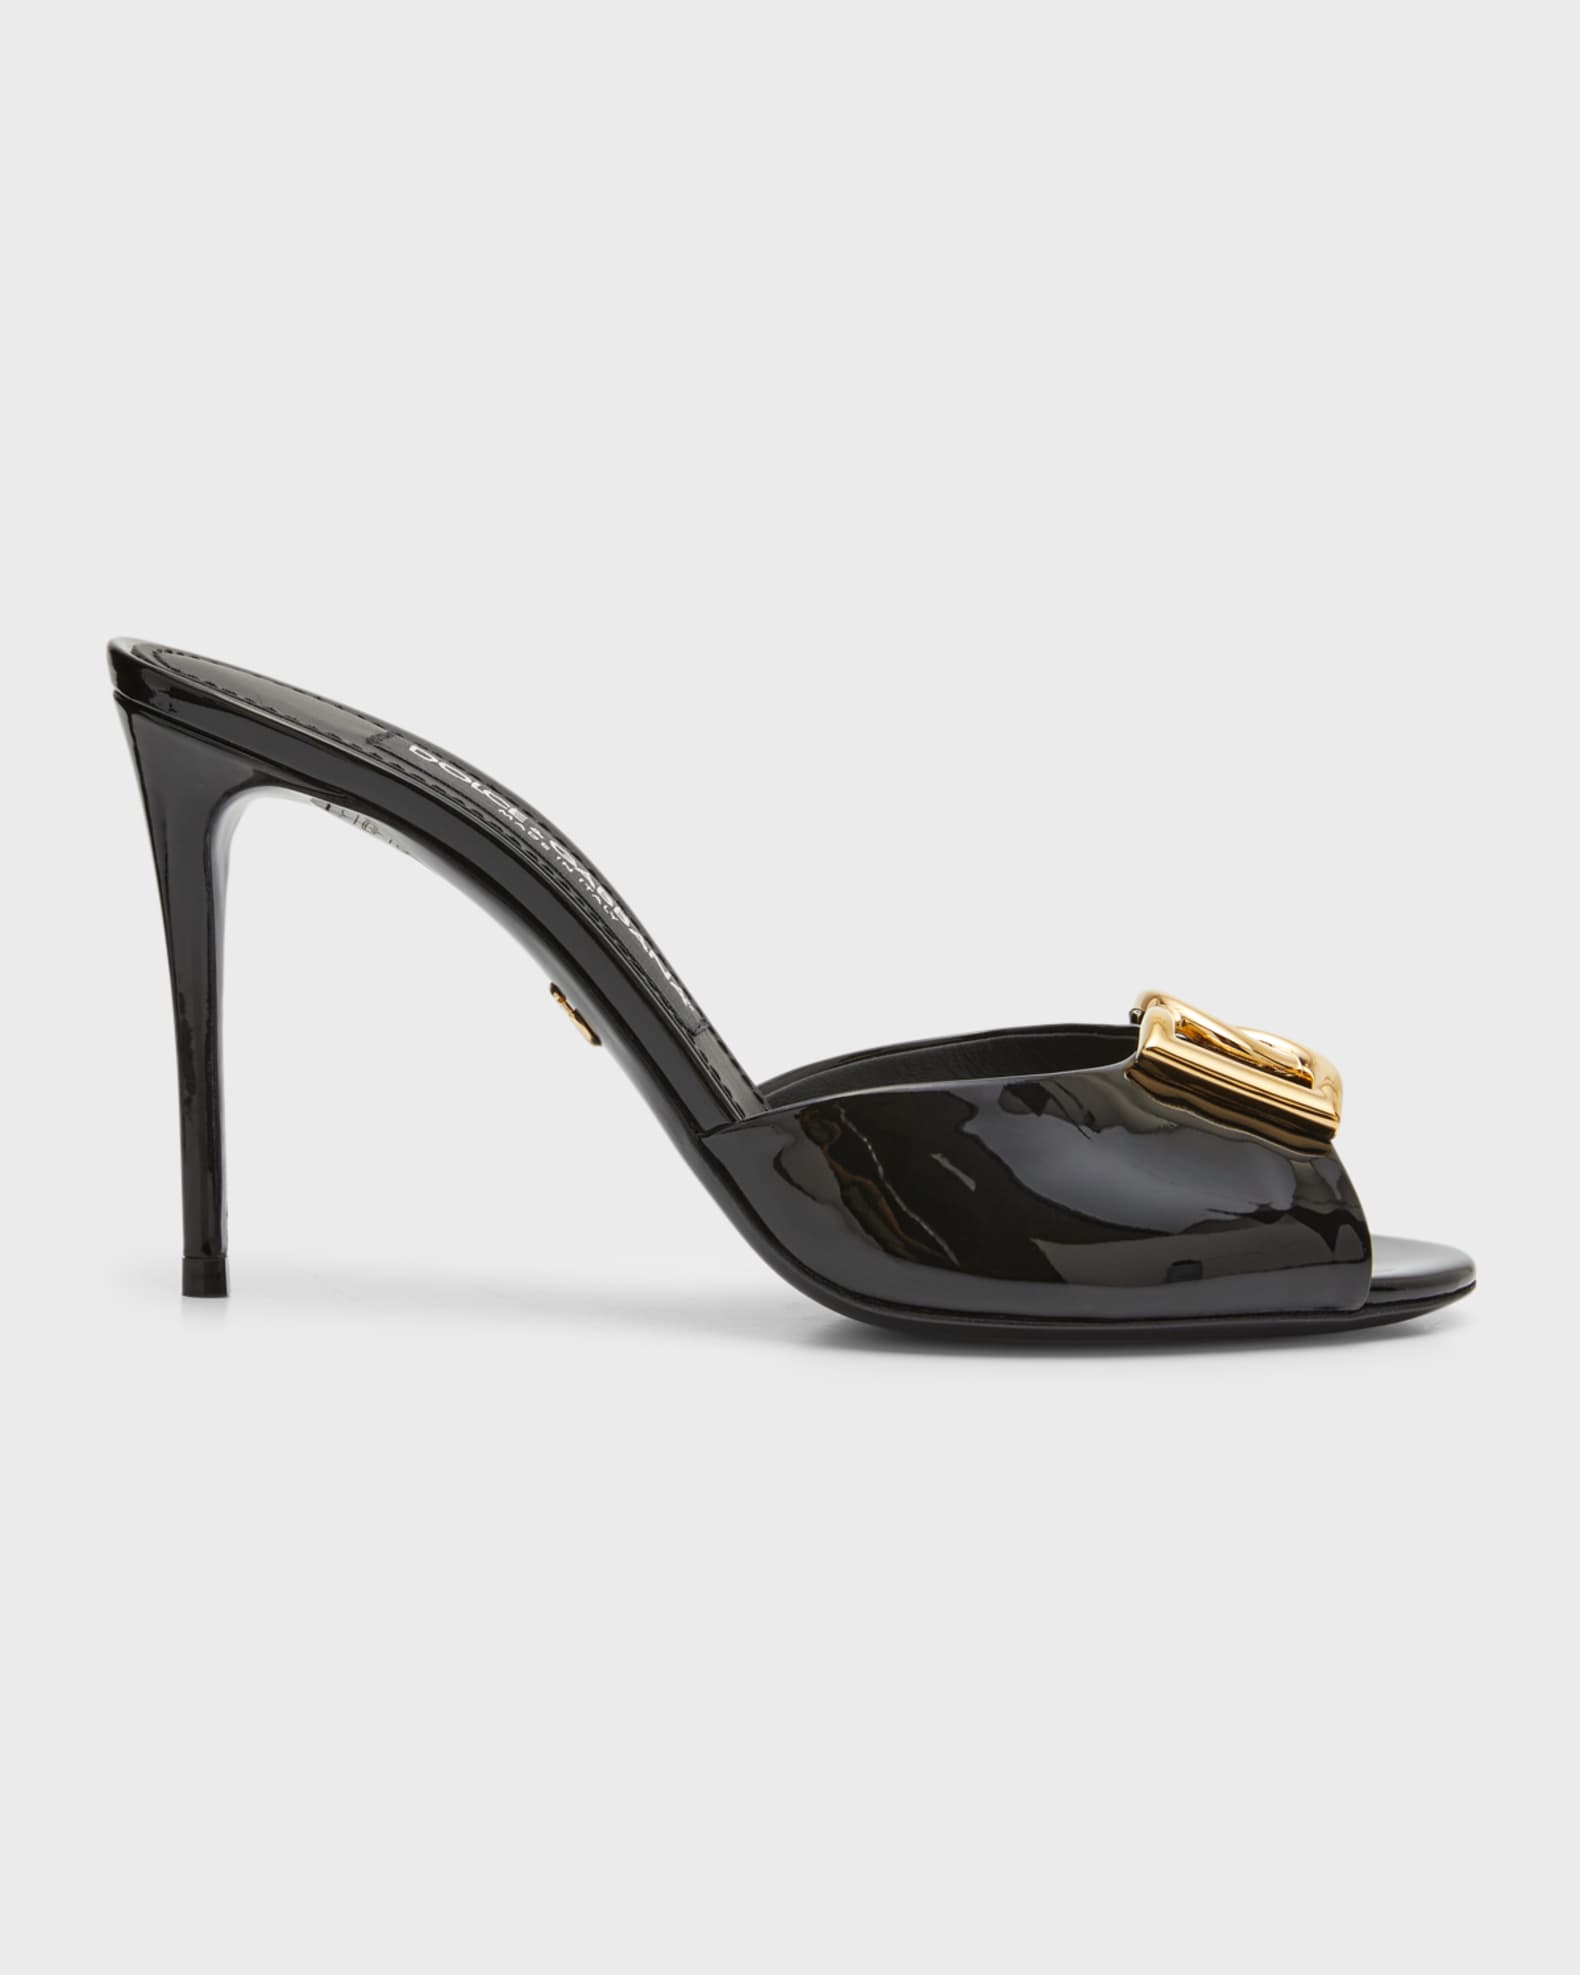 Dolce&Gabbana Vernice Patent Stiletto Mule Sandals | Neiman Marcus